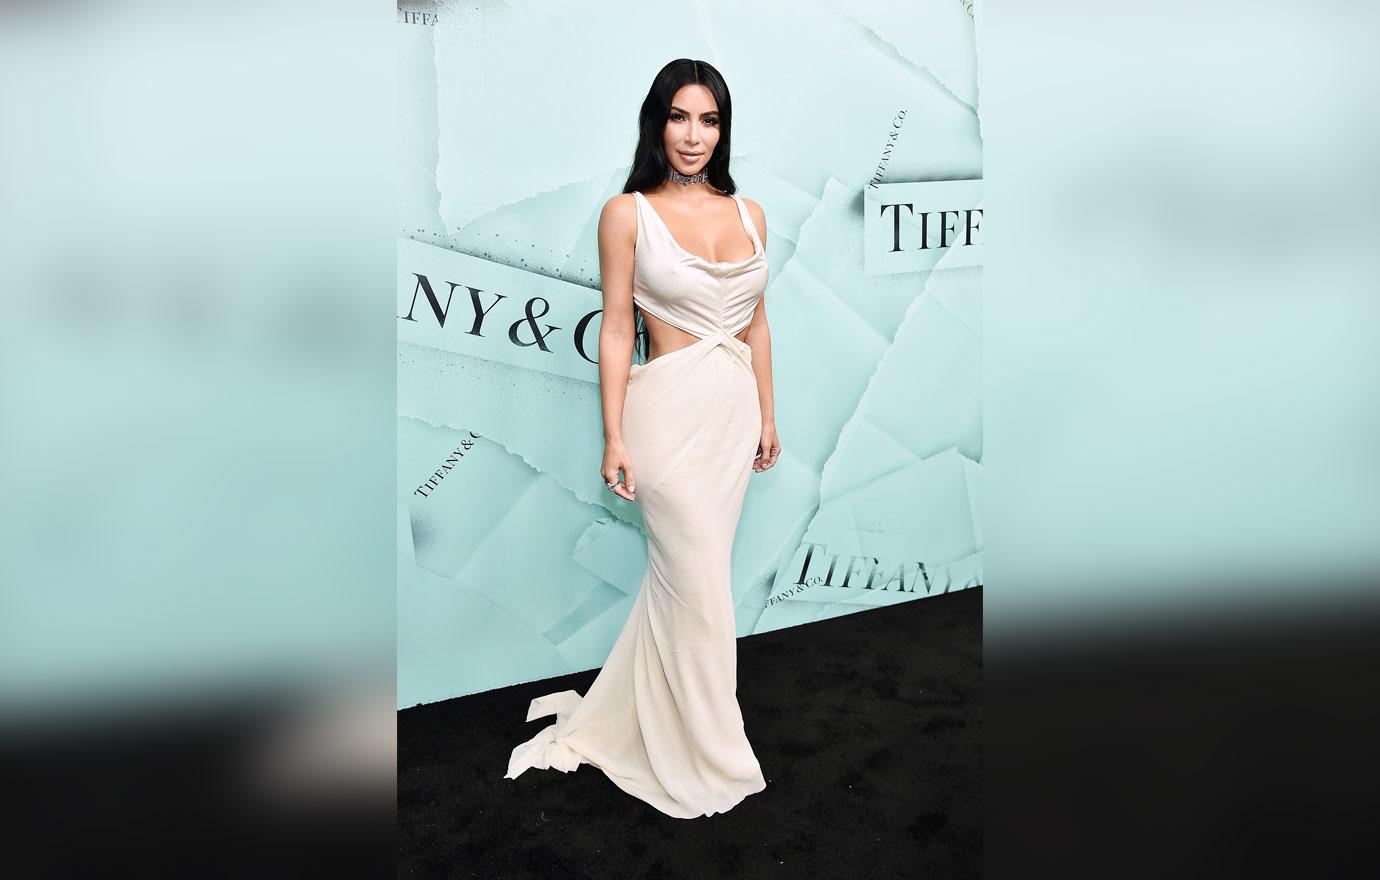 Kim Kardashian gave Louis Vuitton bags totaling $9,000 to daughters, nieces